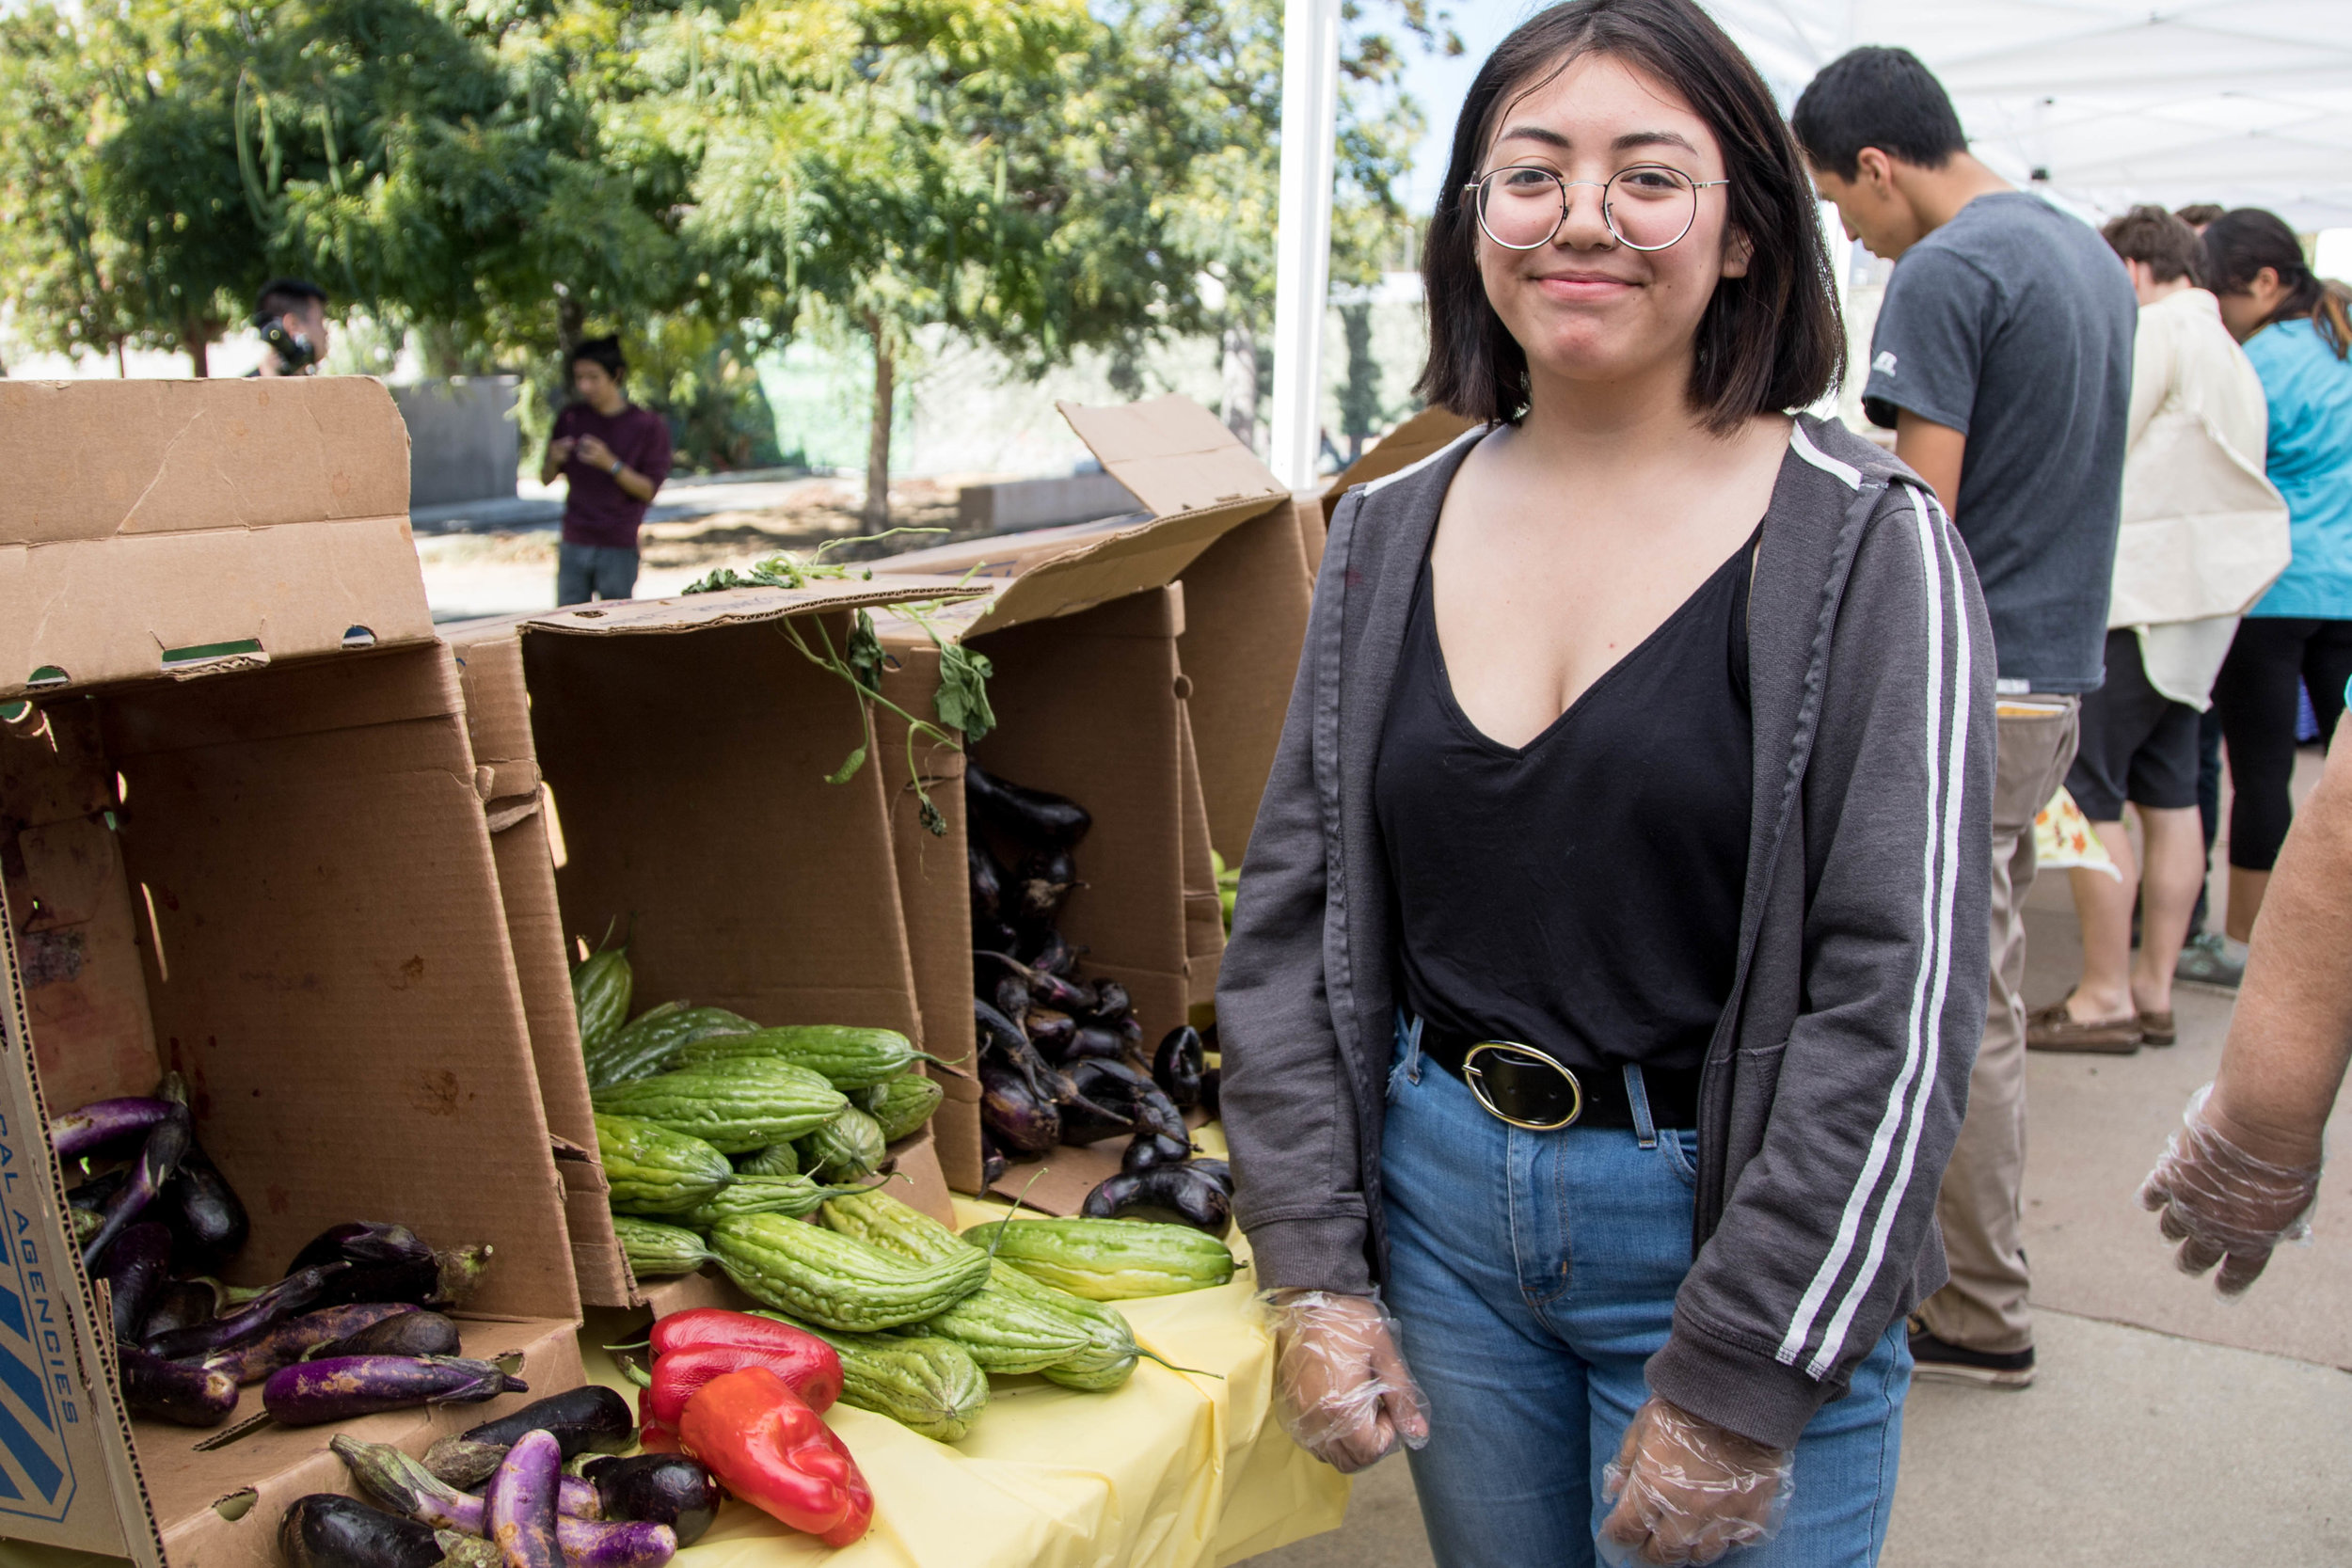  Nattalie Saravia, 18-year old Santa Monica College student and Glub Grow member, volunteers at the Free Corsair Market during Sustainability Week in Santa Monica, Calif. on October 16, 2017. (Photo: Jazz Shademan) 